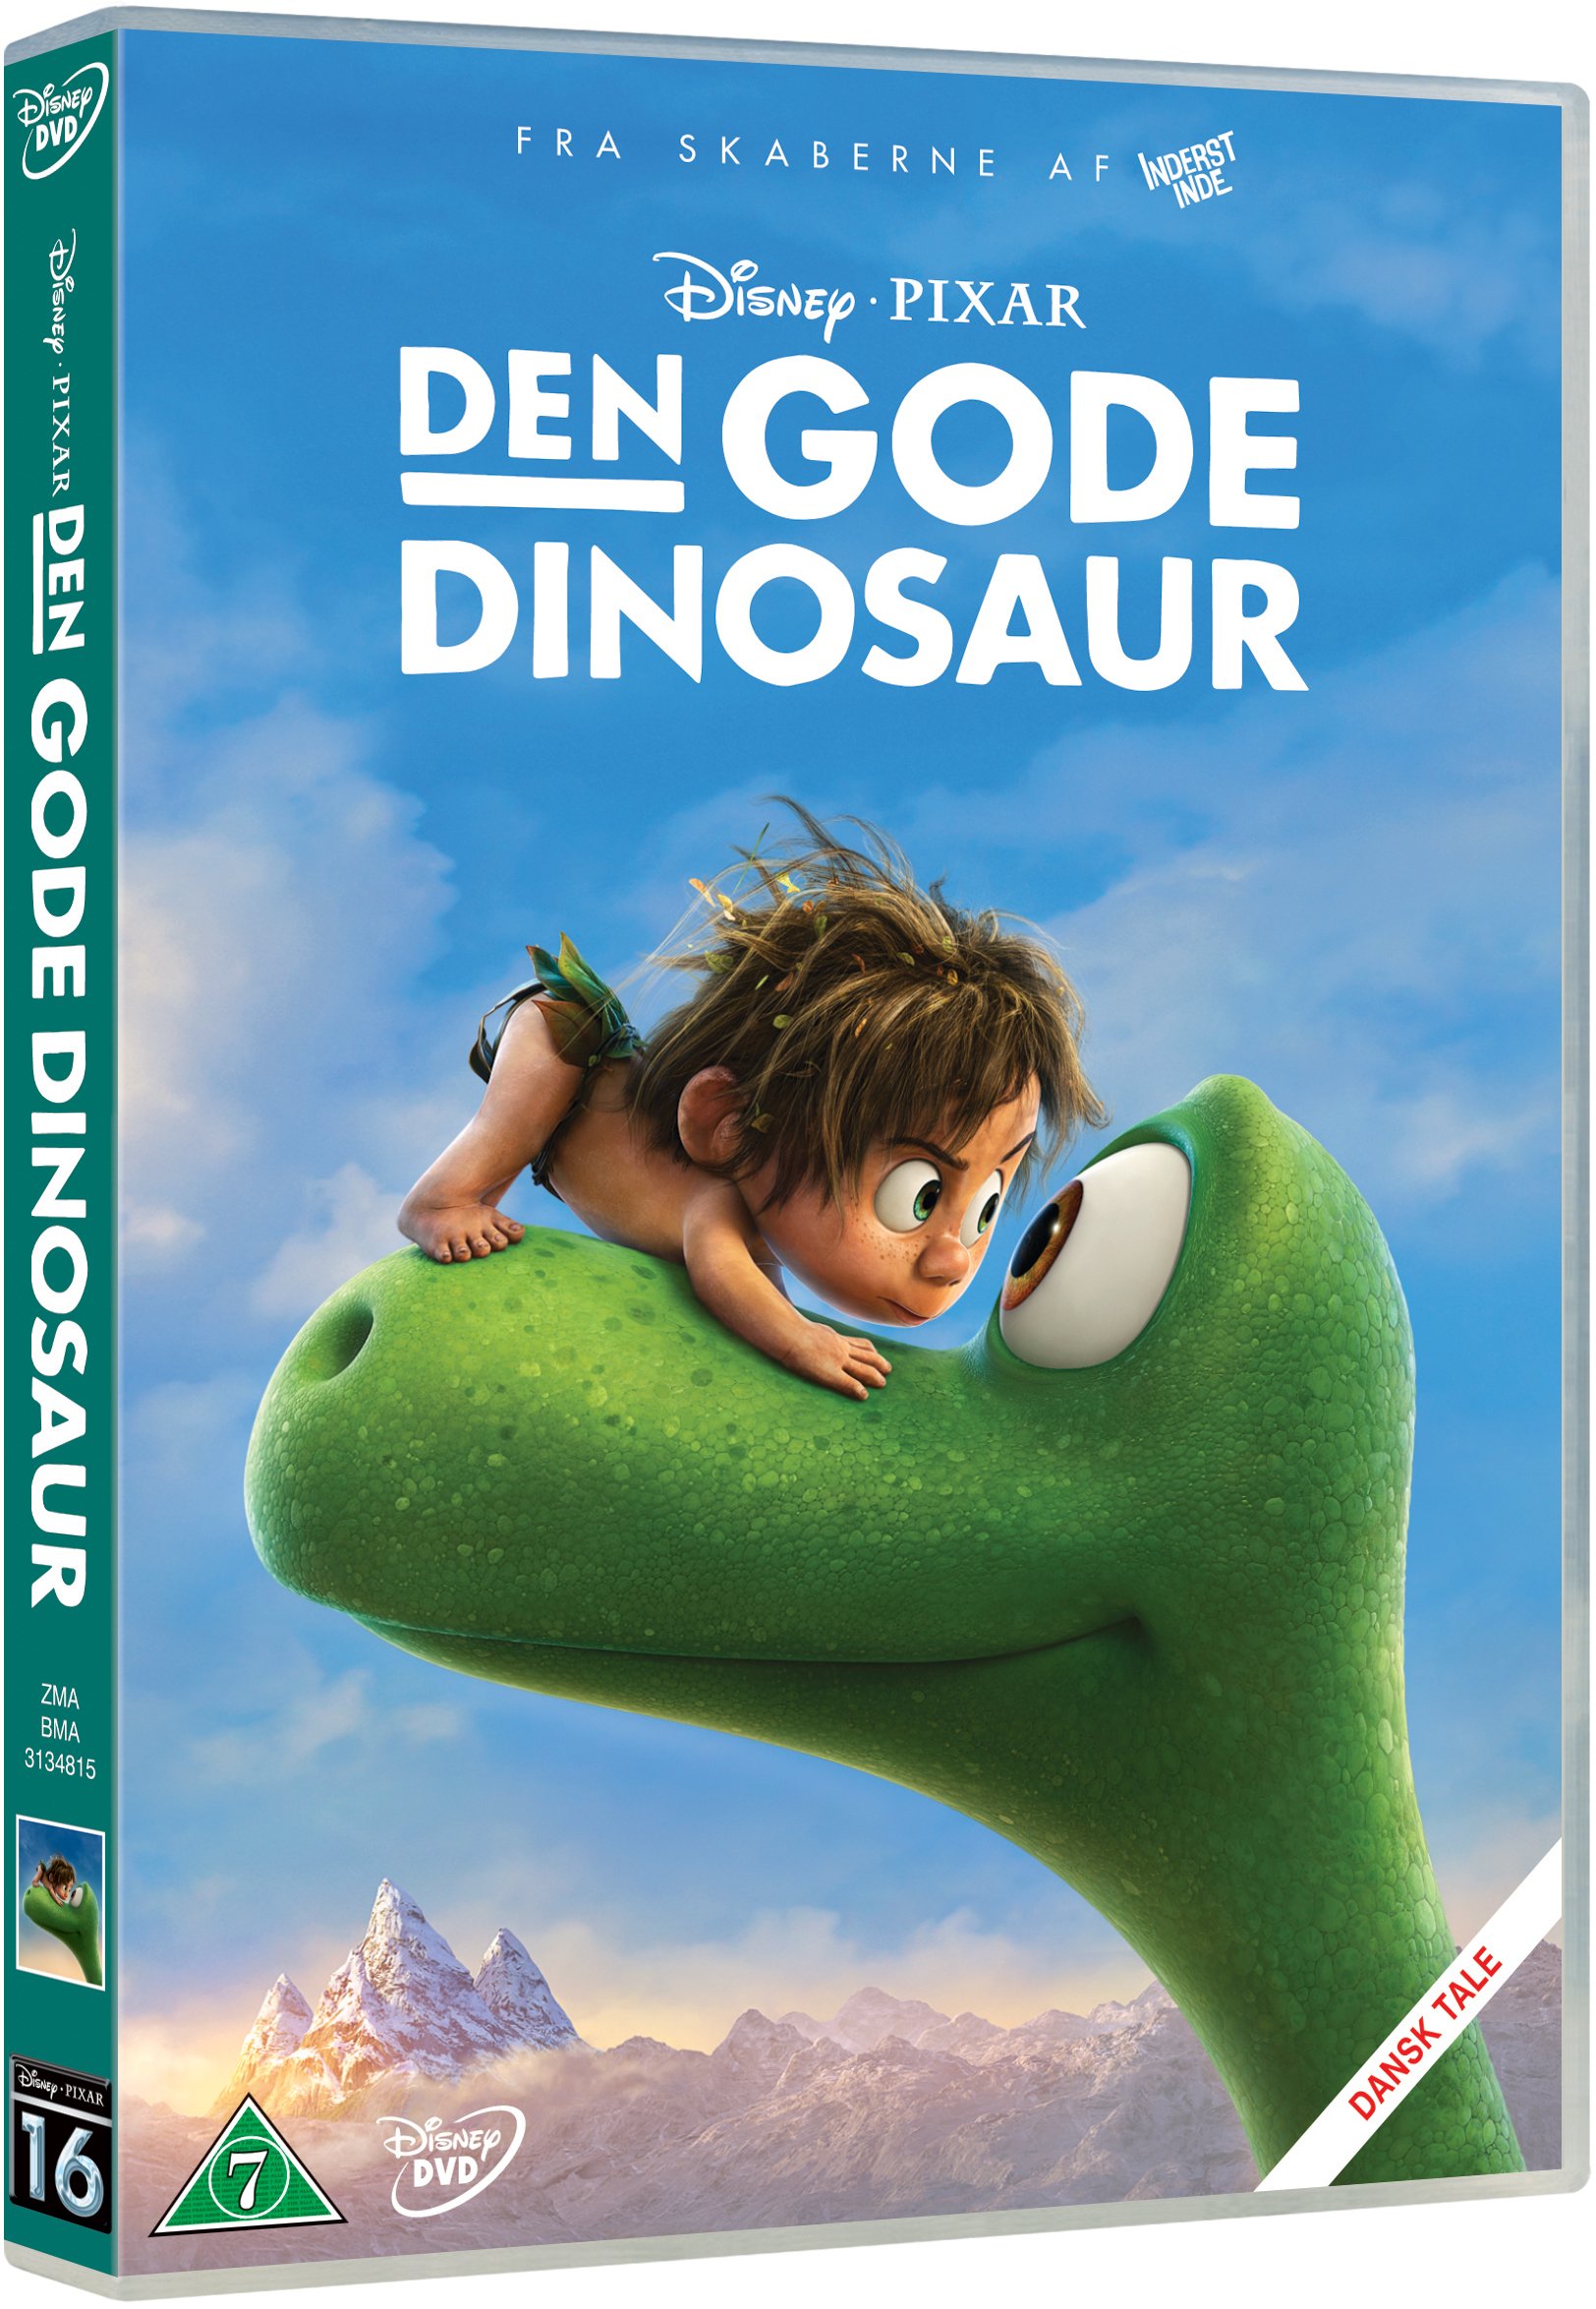 Disneys The Good Dinosaur - DVD